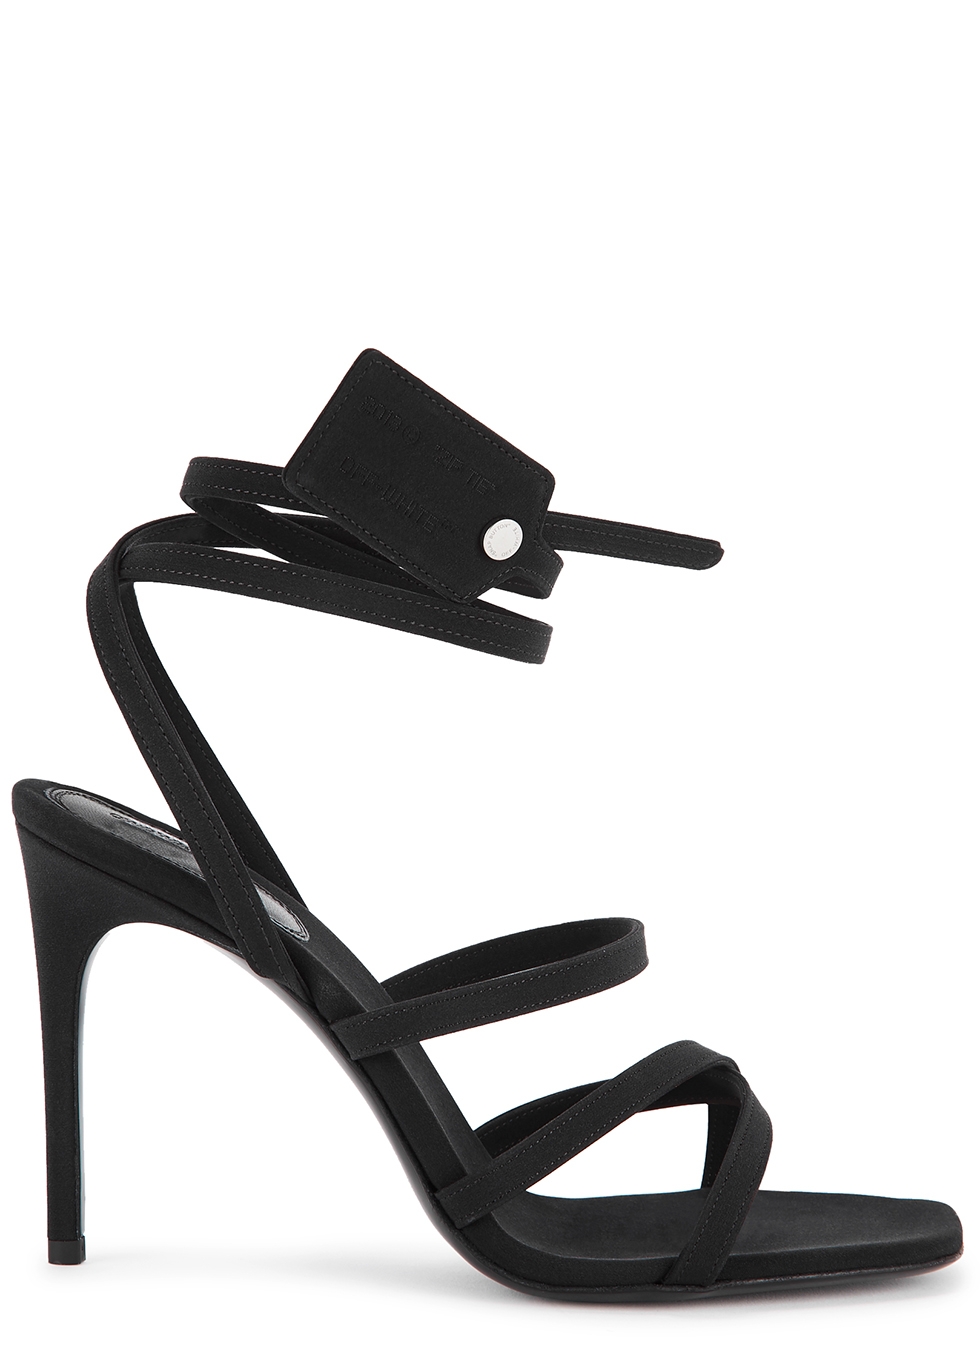 Off-White Zip Tie 100 black satin sandals - Harvey Nichols